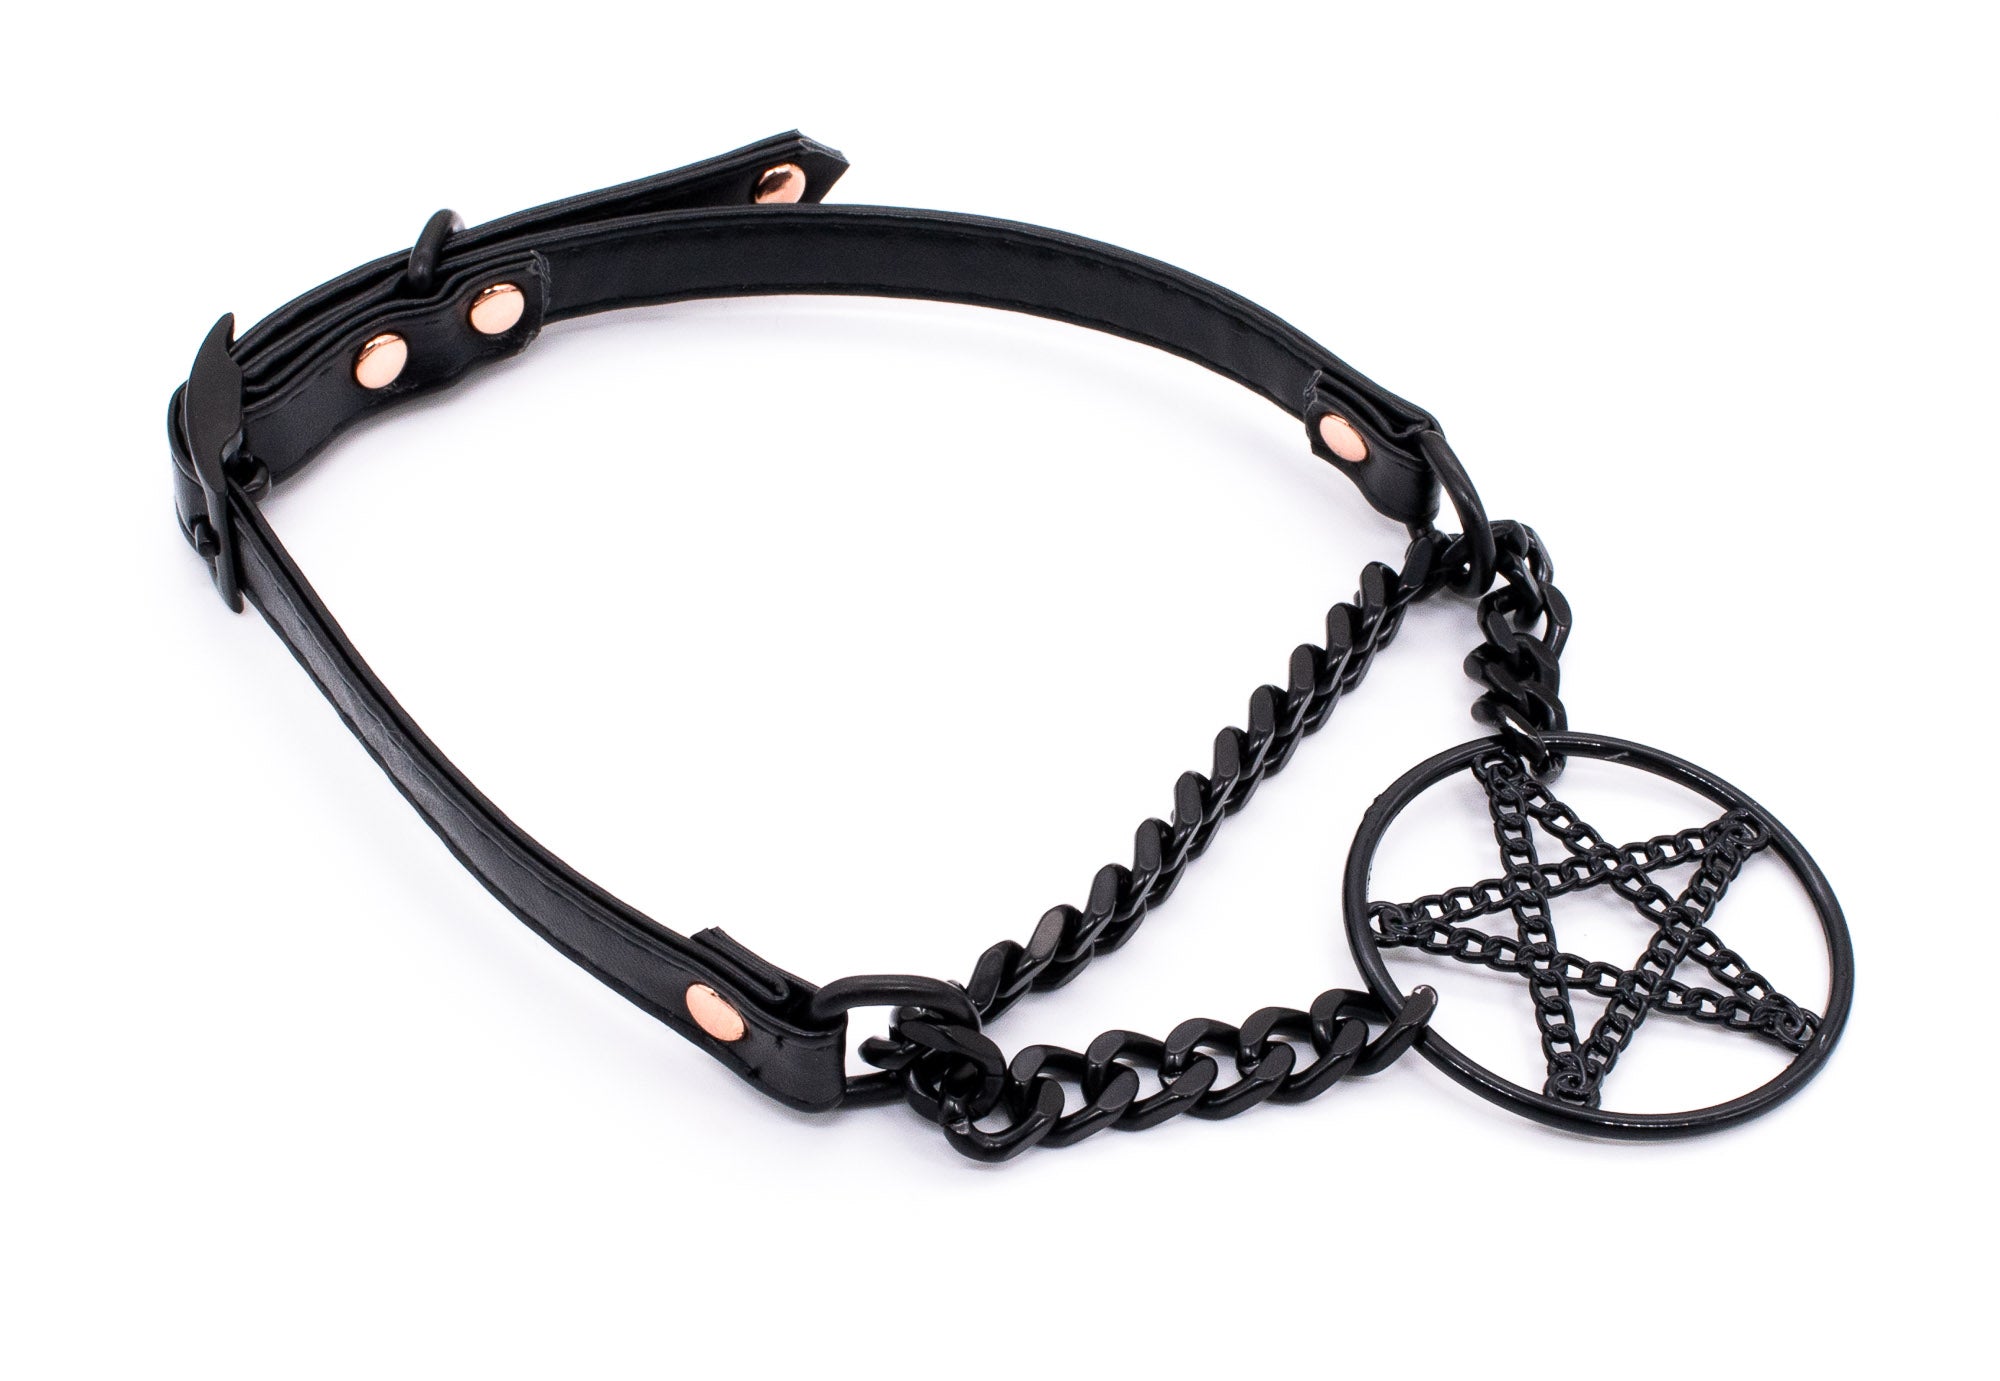 3/8" Black Inverted Pentagram Vegan Leather Martingale Collar in Rose Gold and Black